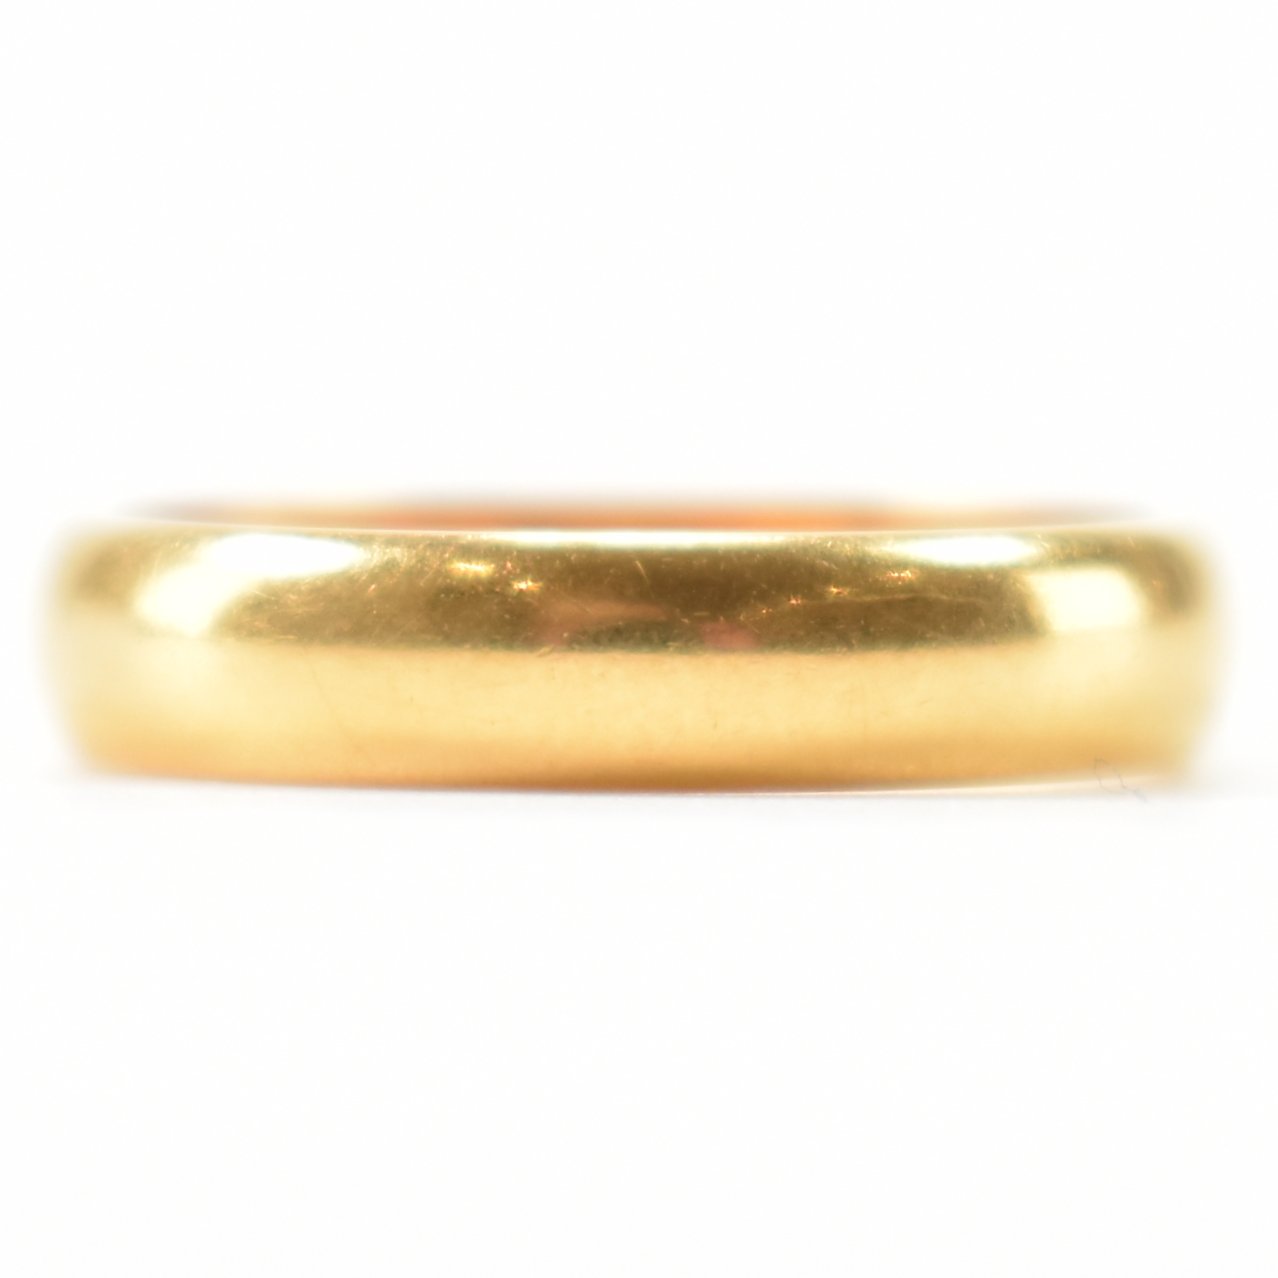 HALLMARKED 22CT GOLD WEDDING BAND RING - Image 4 of 6